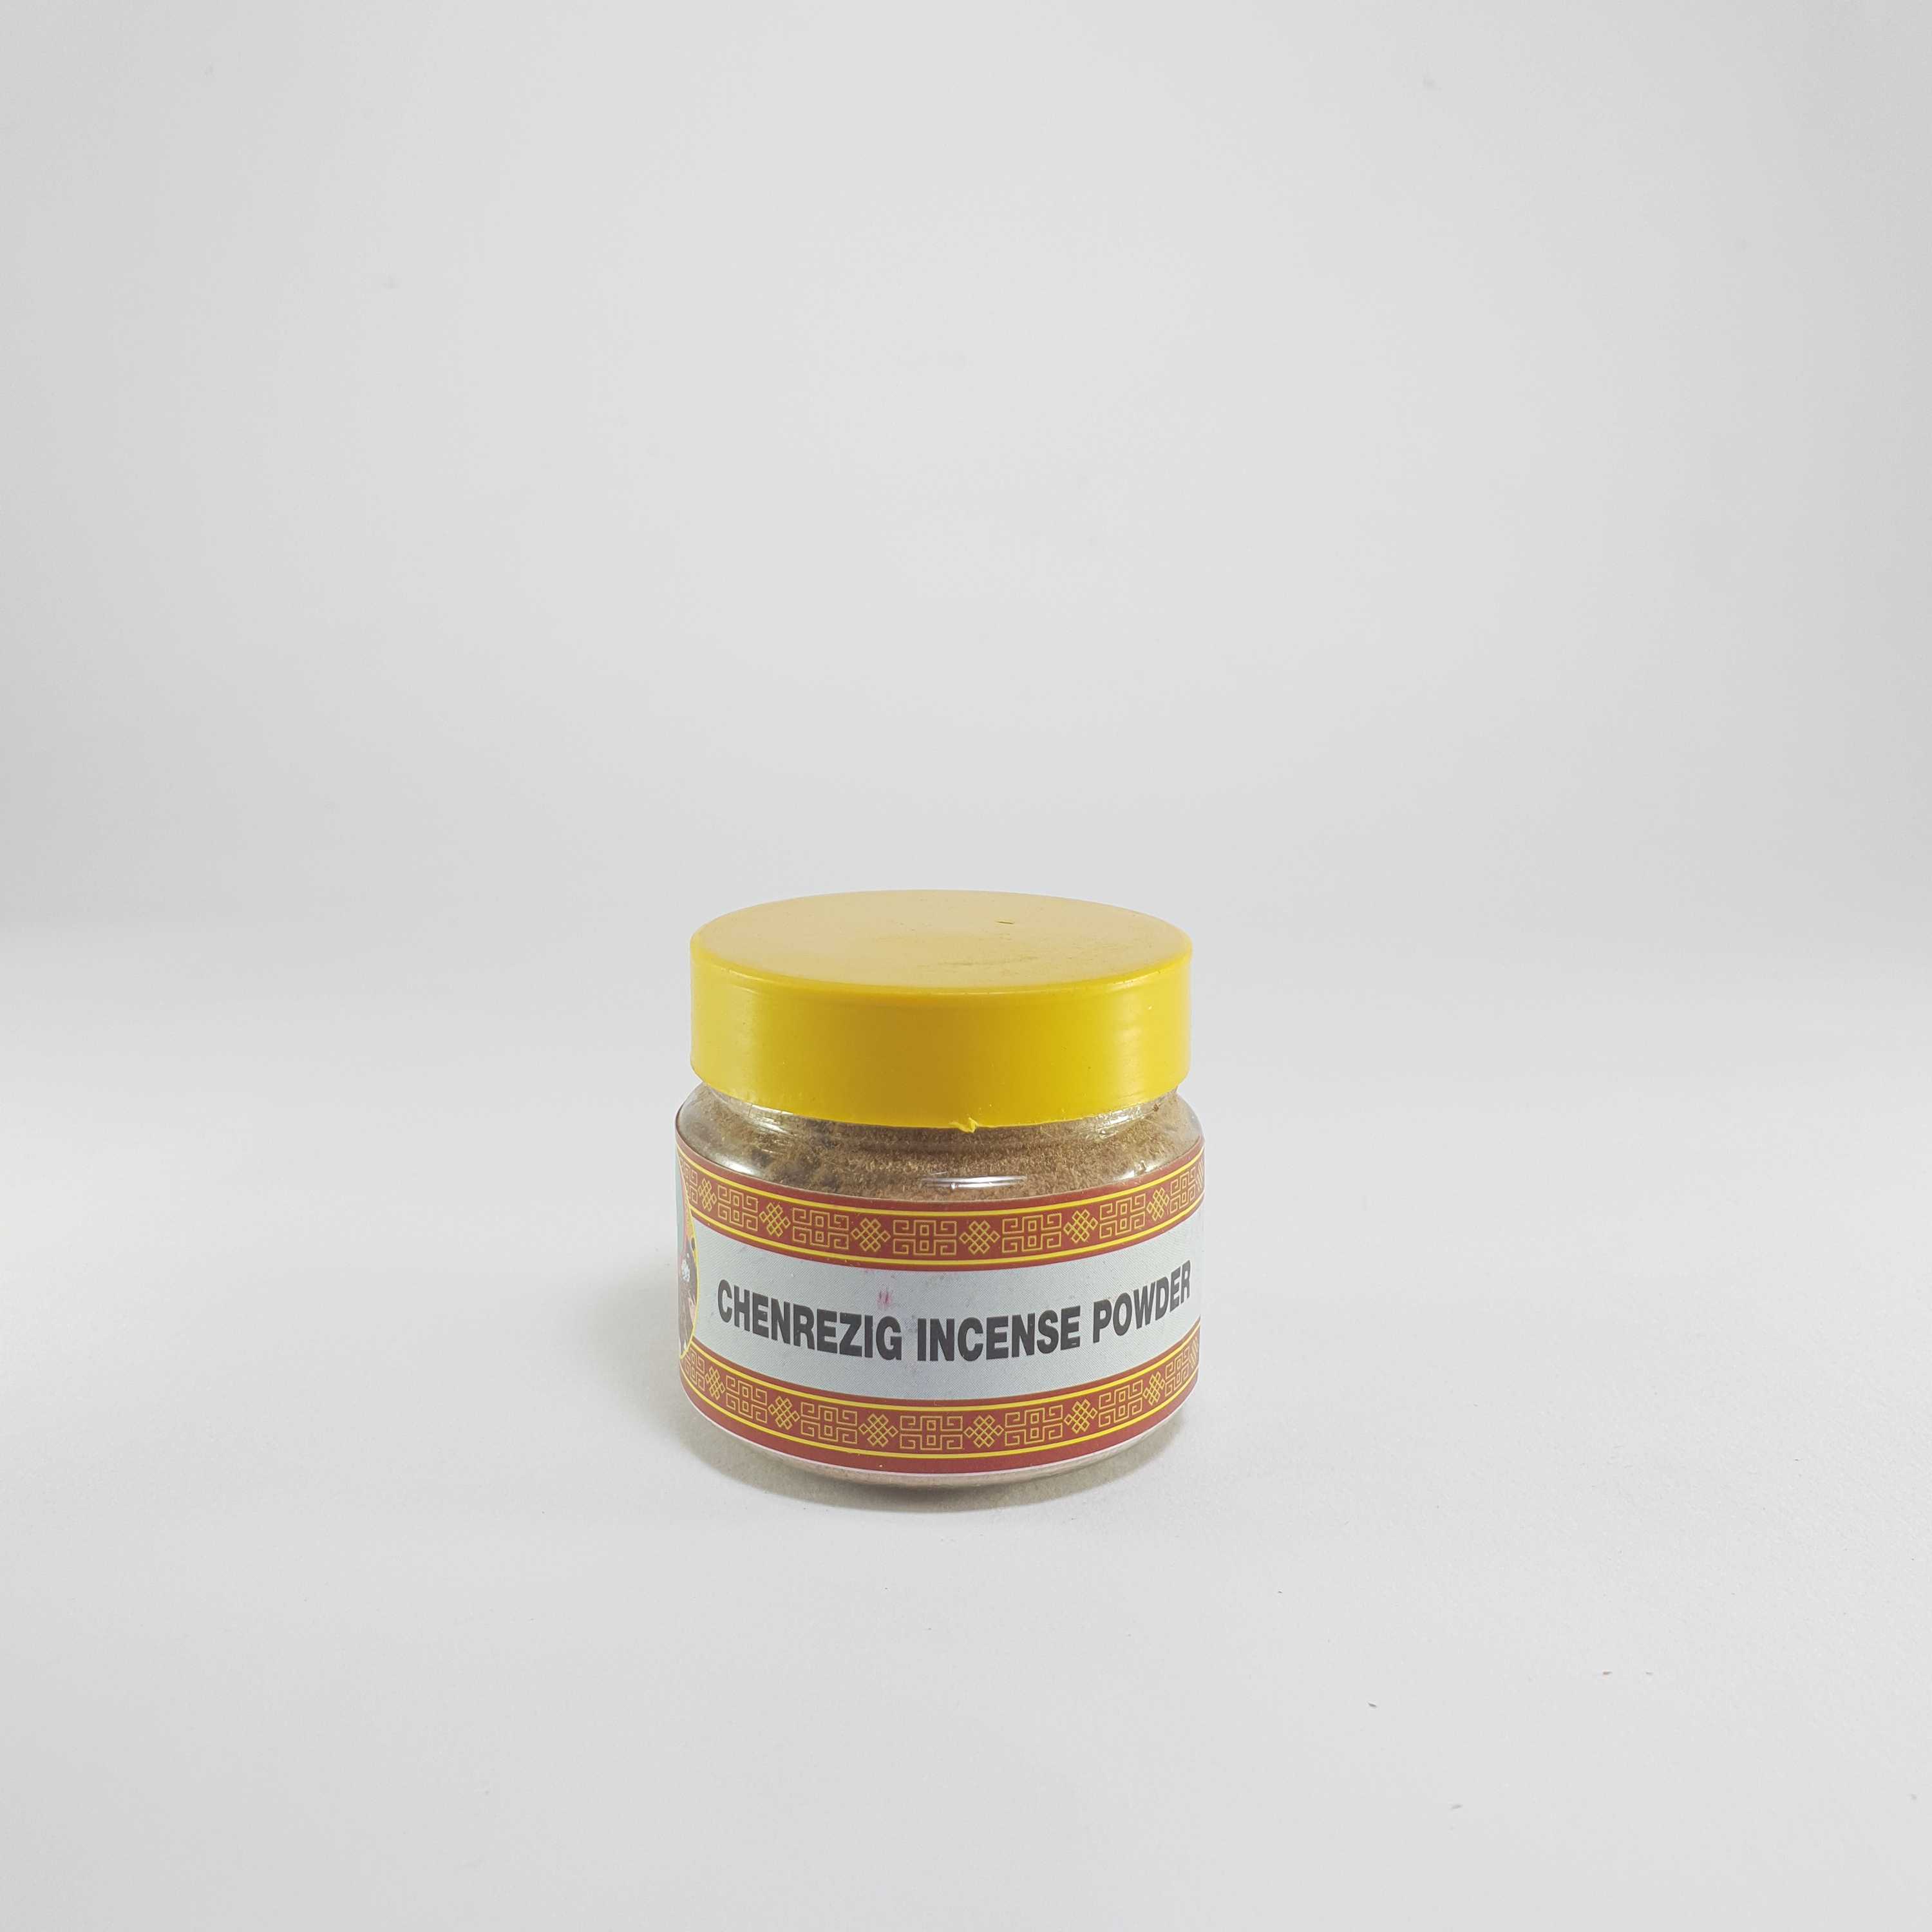 Chenrezig Incense Powder, in Pet Jar